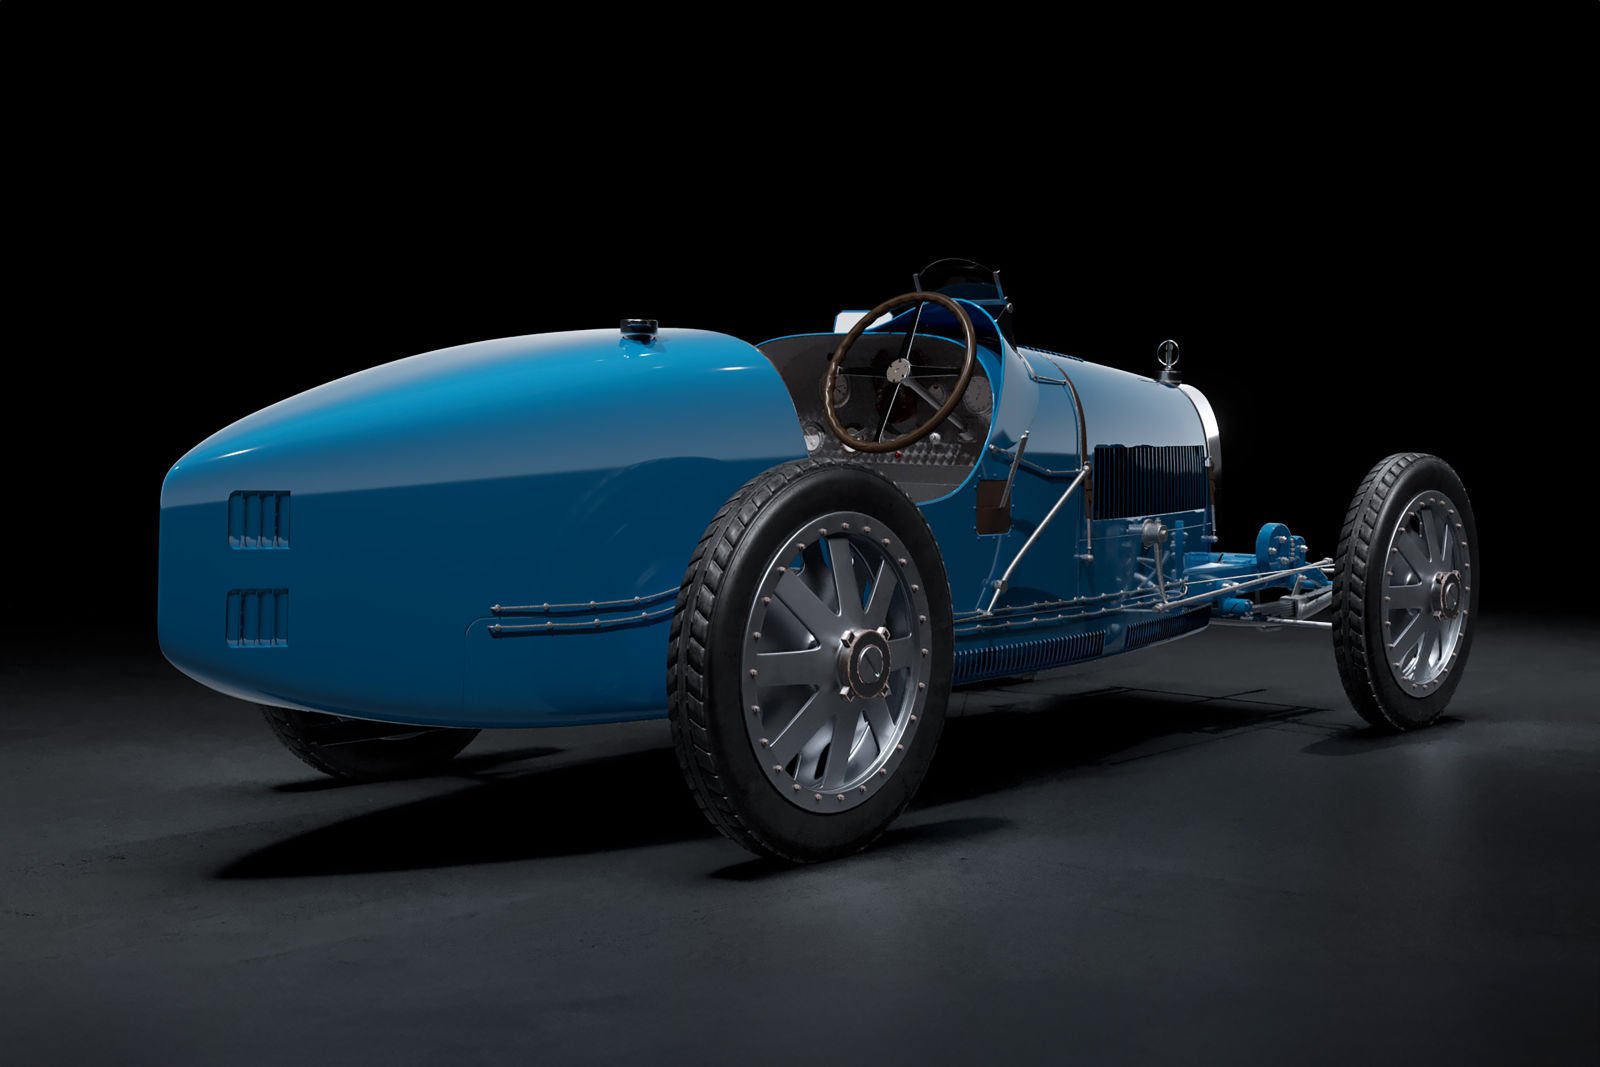 04 BUGATTI_Type 35 Centenary SemanalClásico - Revista online de coches clásicos, de colección y sport - jean bugatti